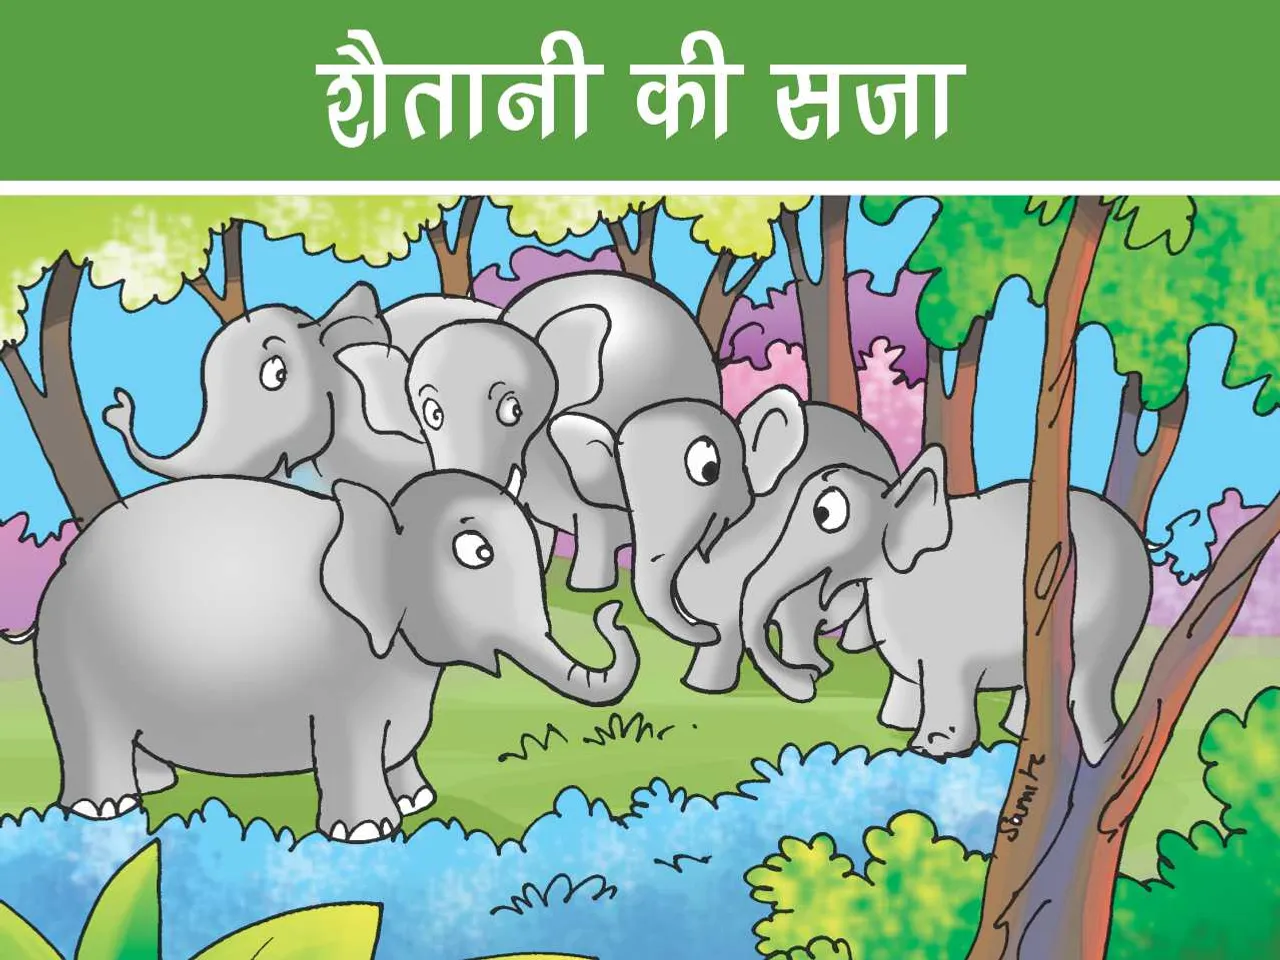 Elephants at river bank cartoon image